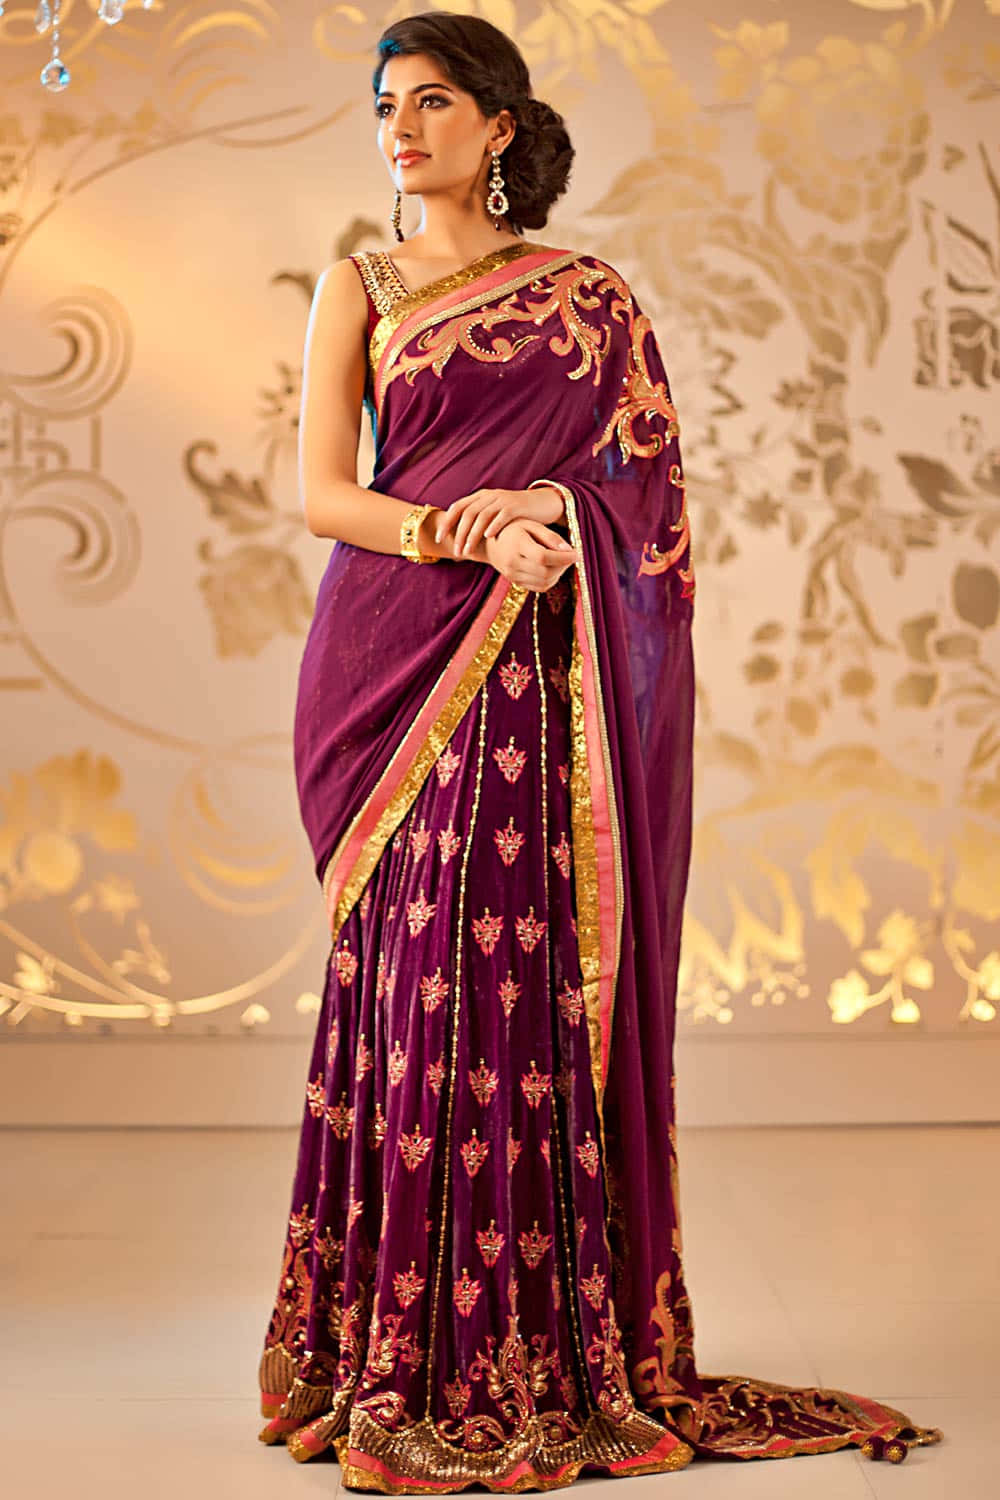 A bright vibrant traditional saree